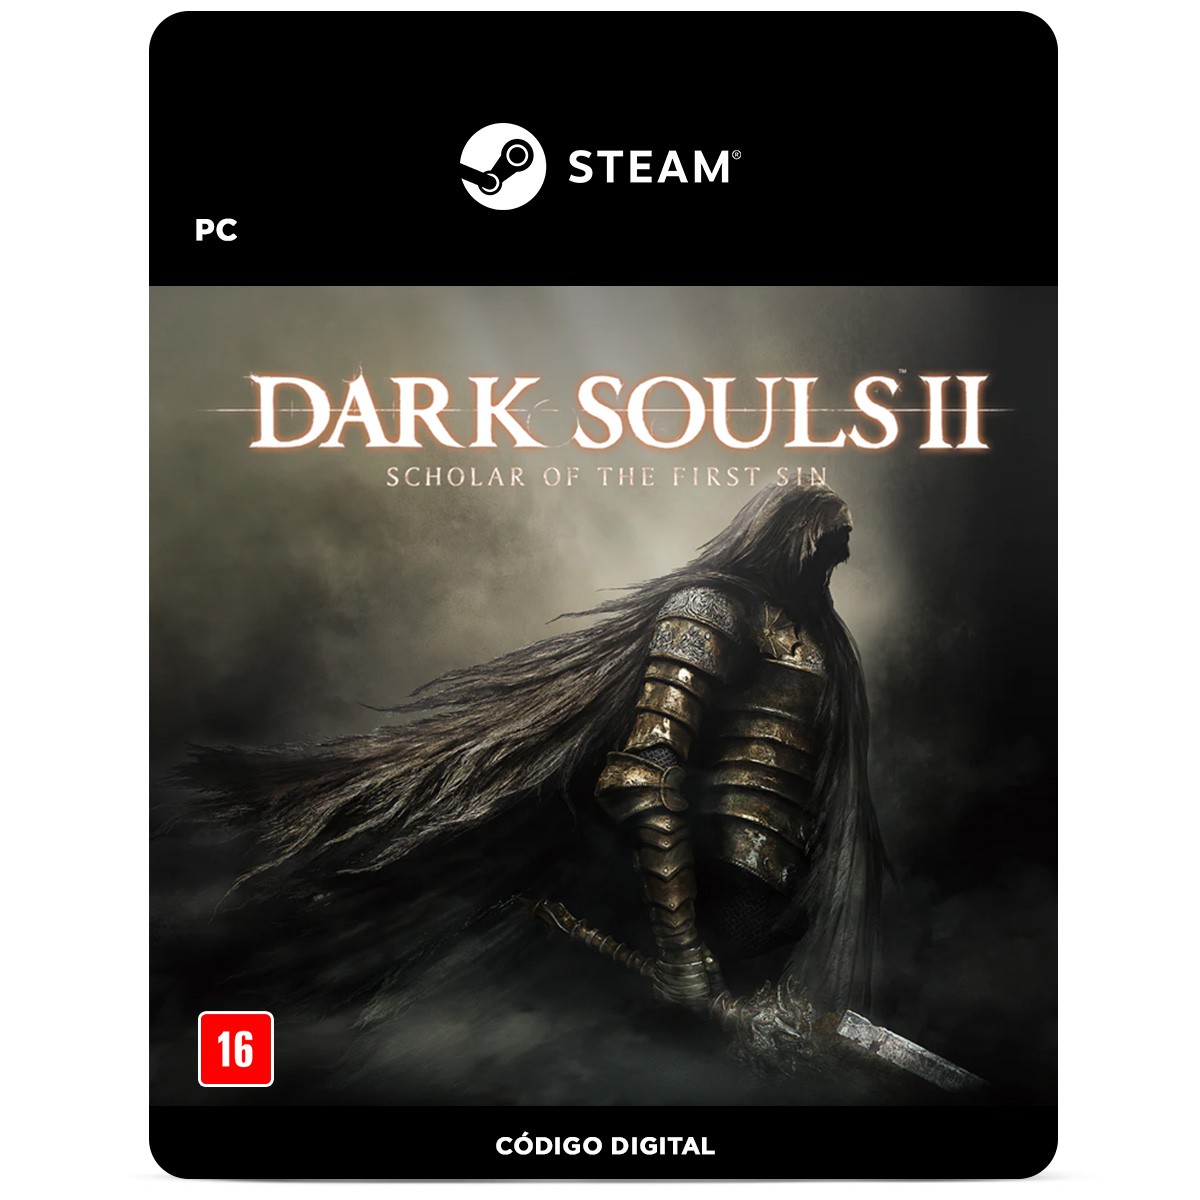 DARK SOULS™ II: Scholar of the First Sin PS4 — buy online and